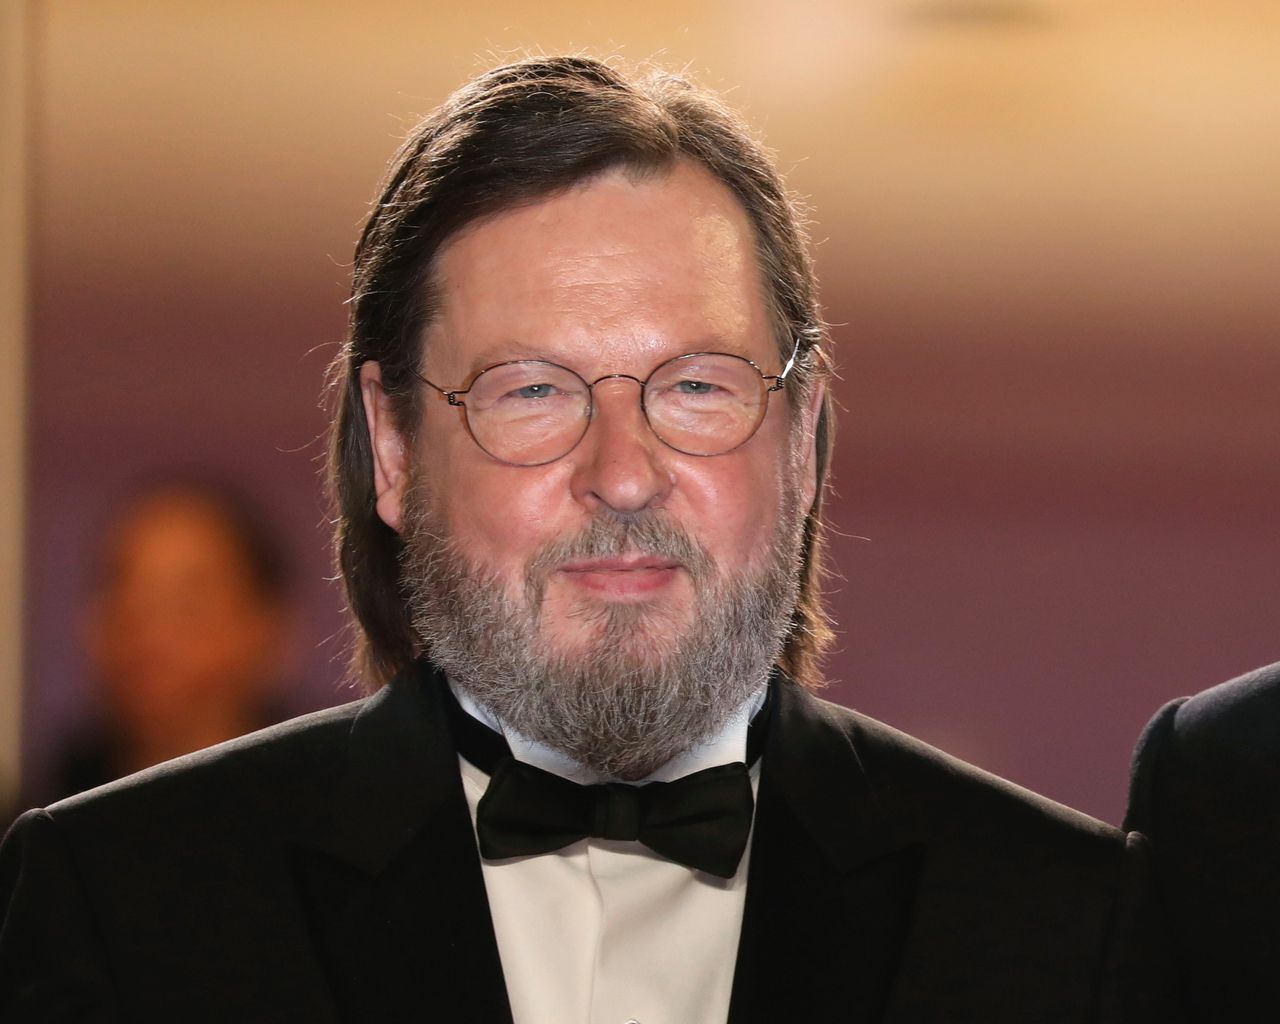 Regisseur Lars von Trier in 2018 in Cannes bij de première van The House That Jack Built.